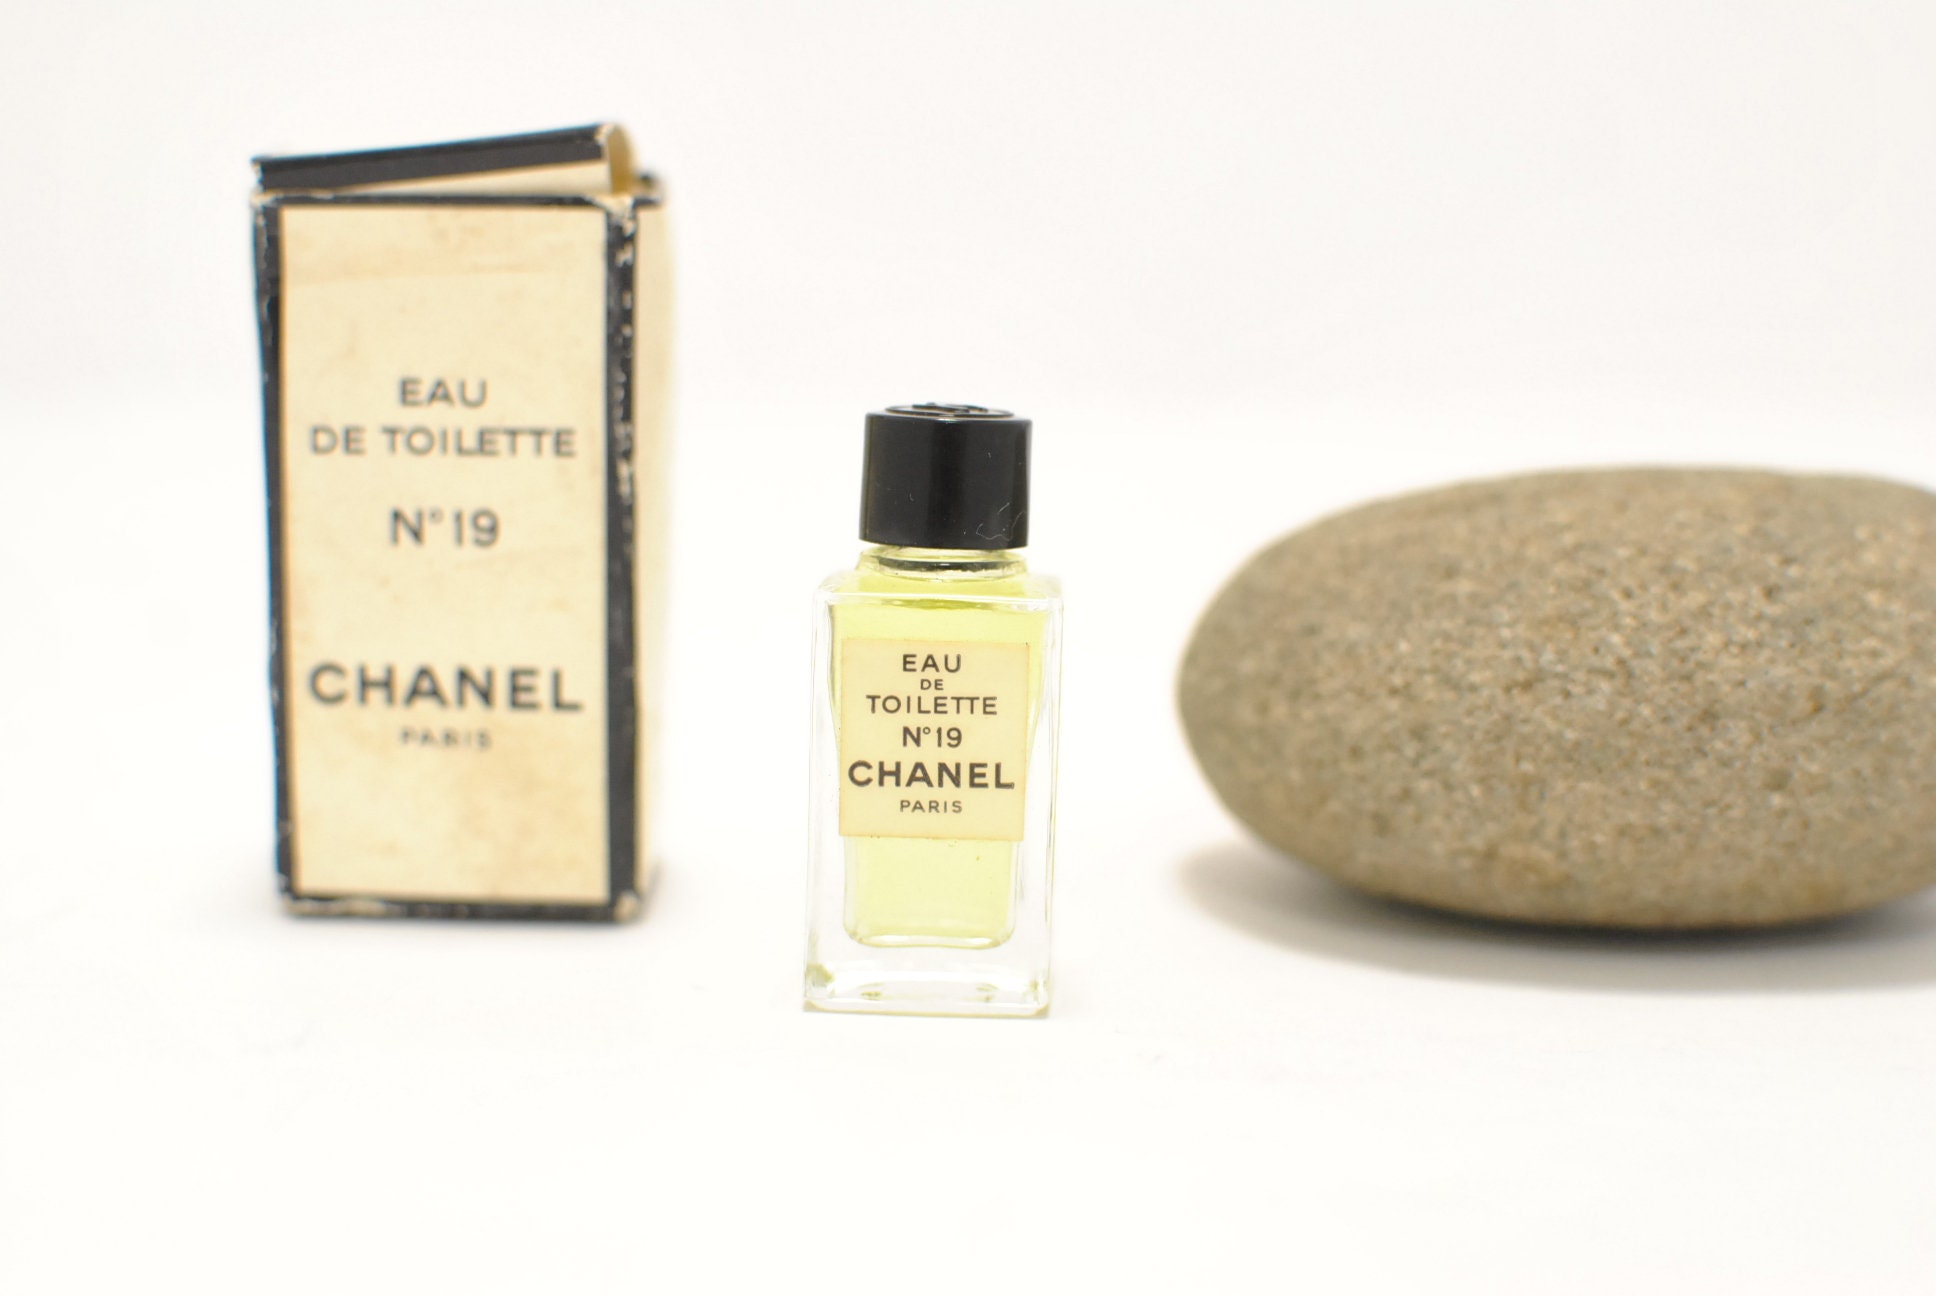 CHANEL NO19 EAU de toilette 4ml Sample Mini Miniature EdT Womens Perfume No  19 $34.99 - PicClick